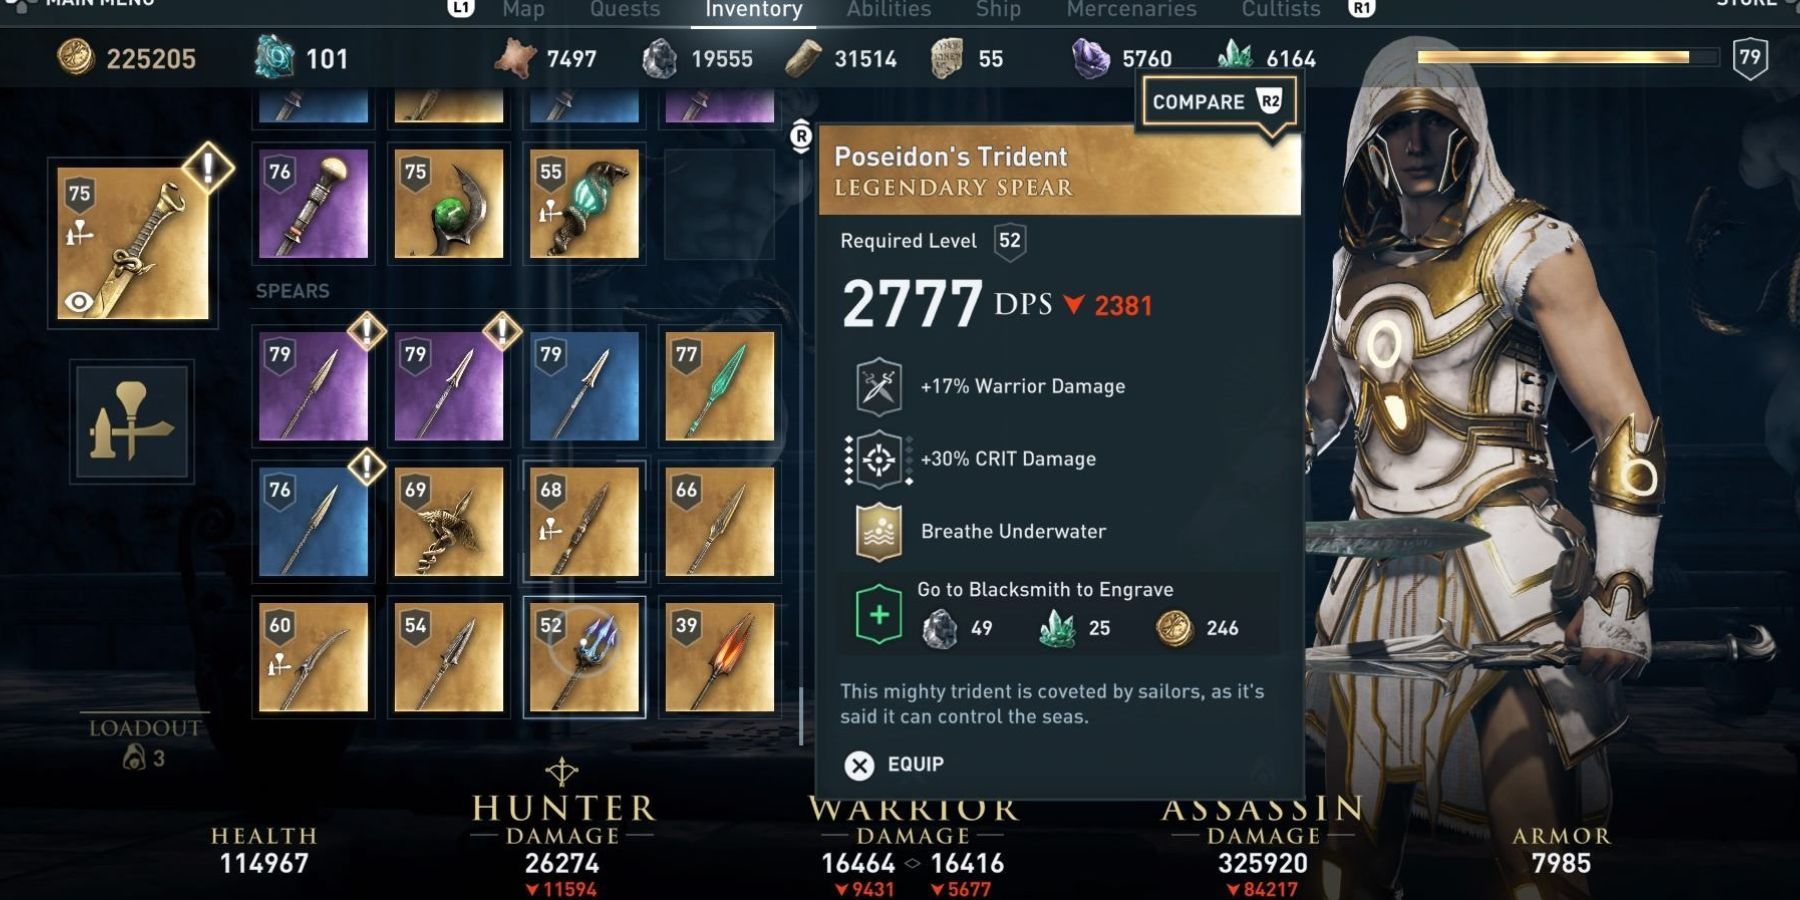 Assassin's Creed Odyssey Poseidon's Trident